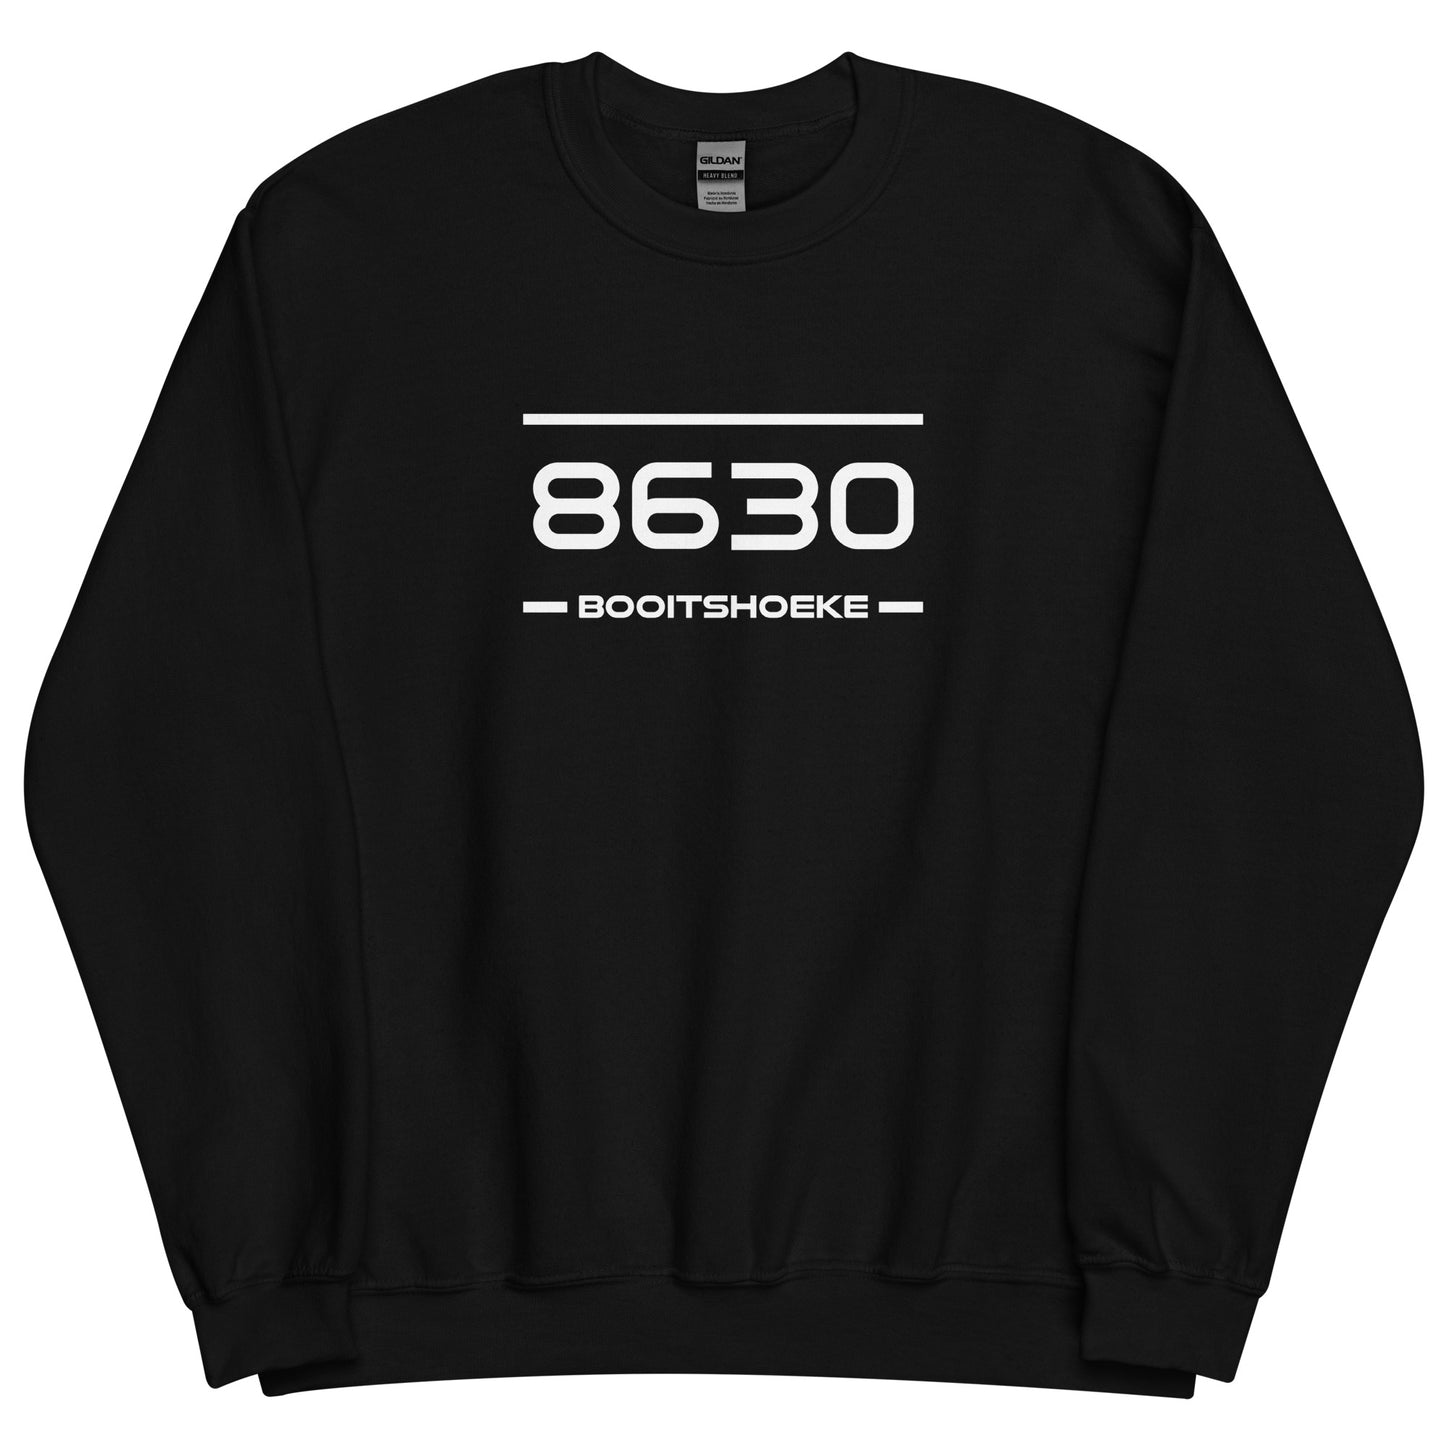 Sweater - 8630 - Booitshoeke (M/V)